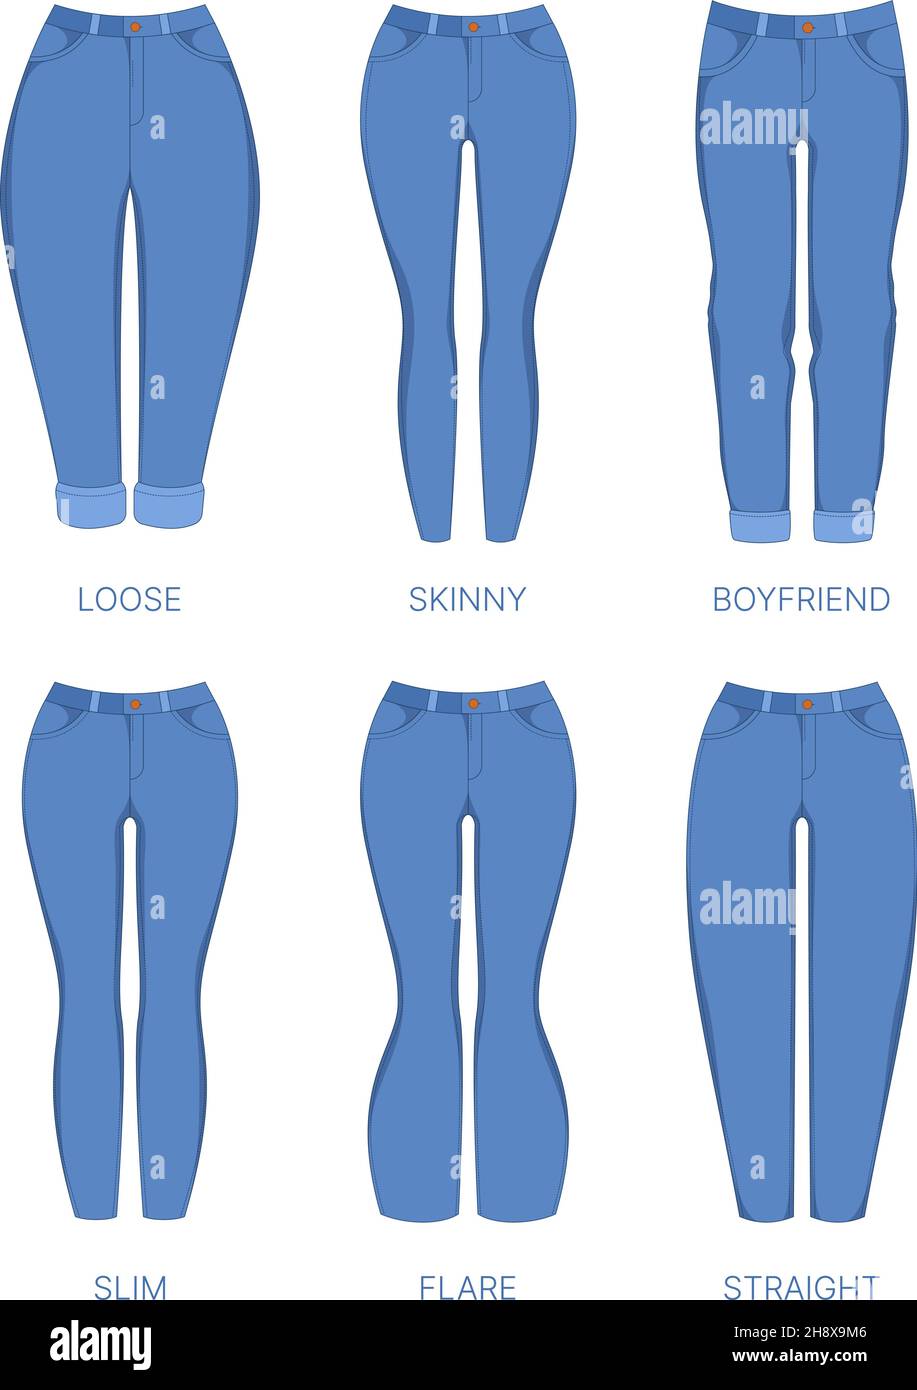 https://c8.alamy.com/compes/2h8x9m6/vaqueros-de-mujer-ropa-de-tela-azul-denim-para-chicas-con-estilo-jeans-skinny-pantalones-garish-vector-colored-planos-cuadros-2h8x9m6.jpg